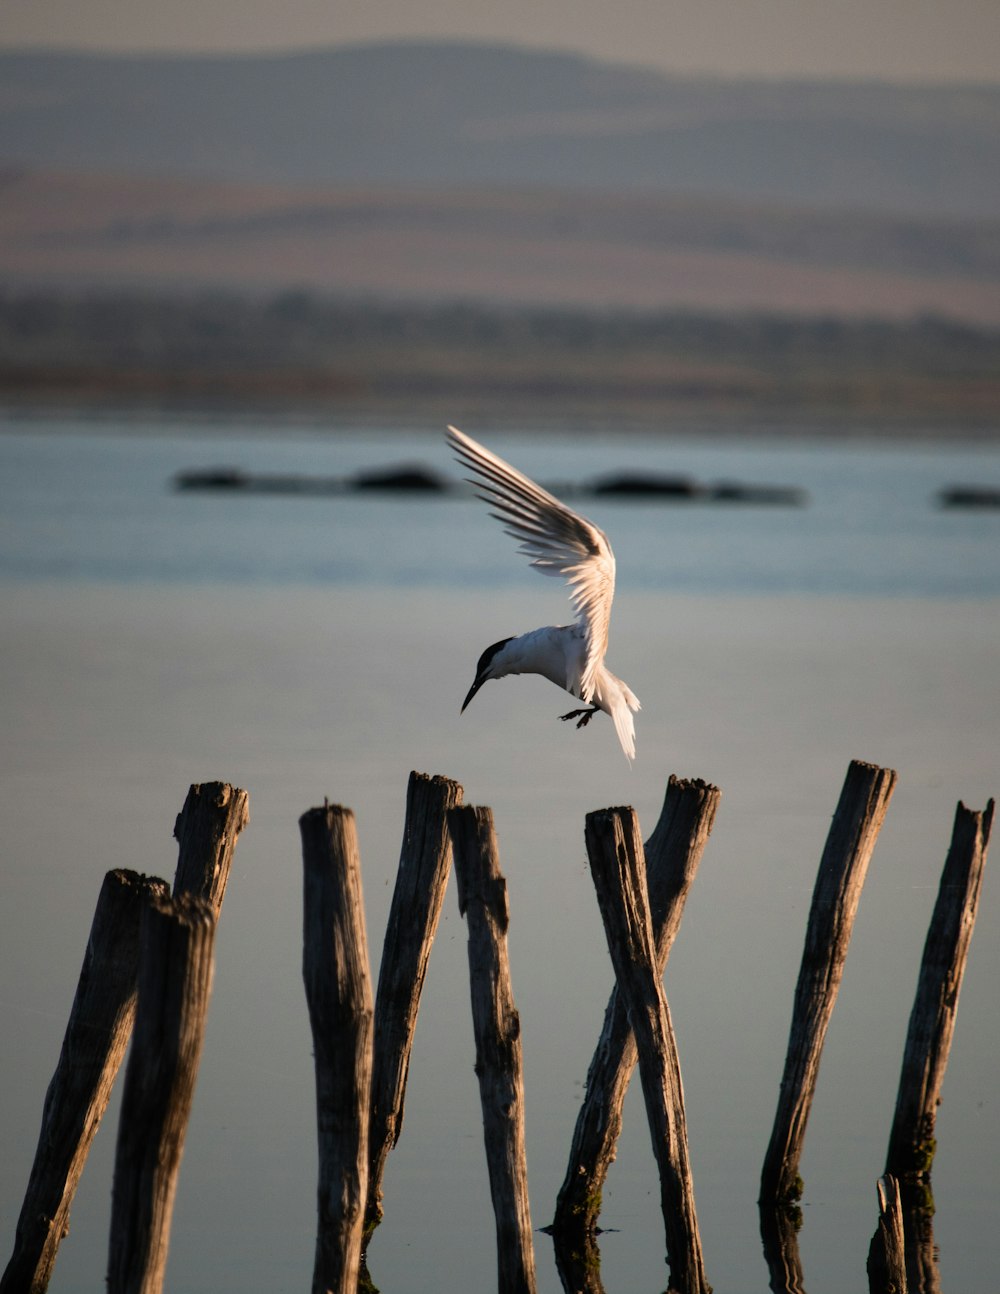 white bird on brown wooden post during daytime